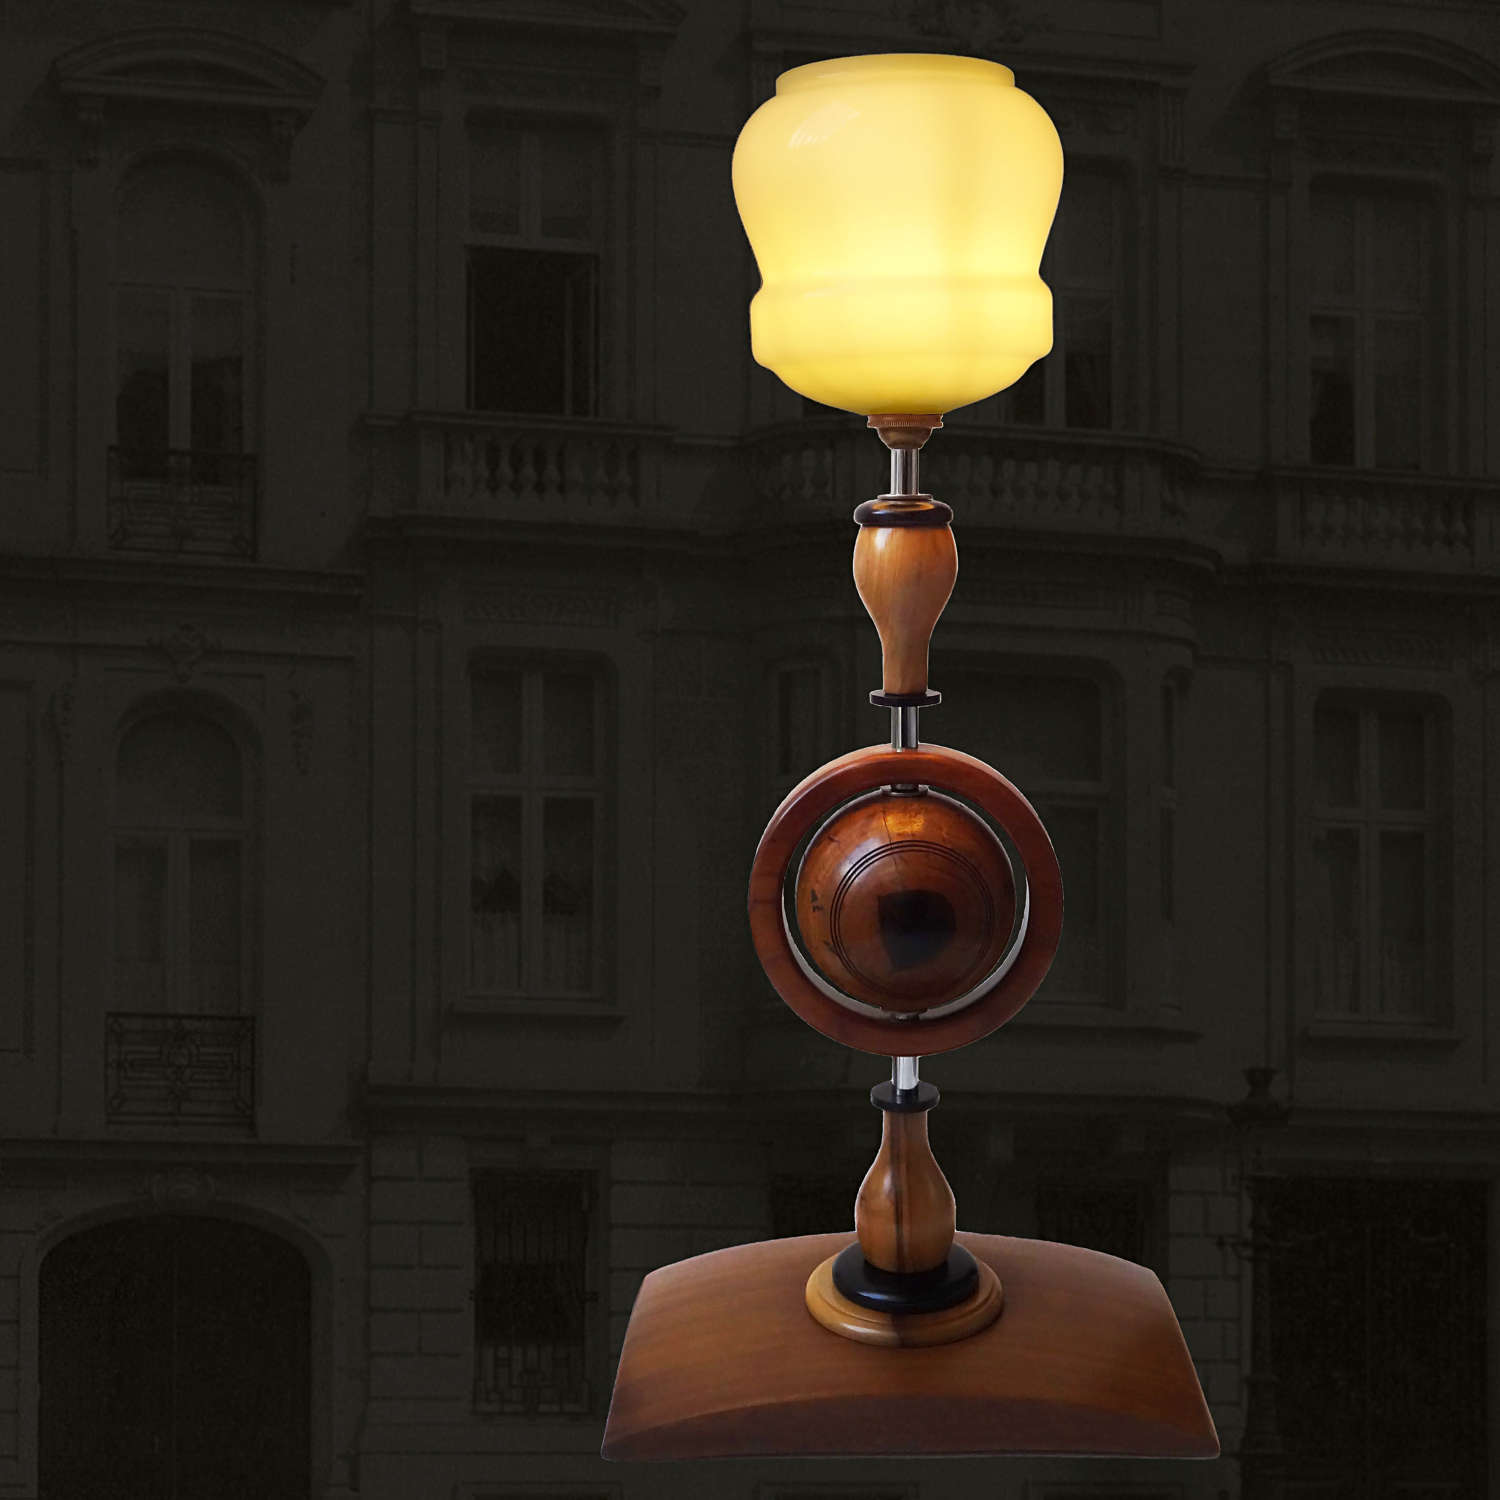 Unique sculptural lamp - Liberamente - by Gilles Bourlet Dartmouth